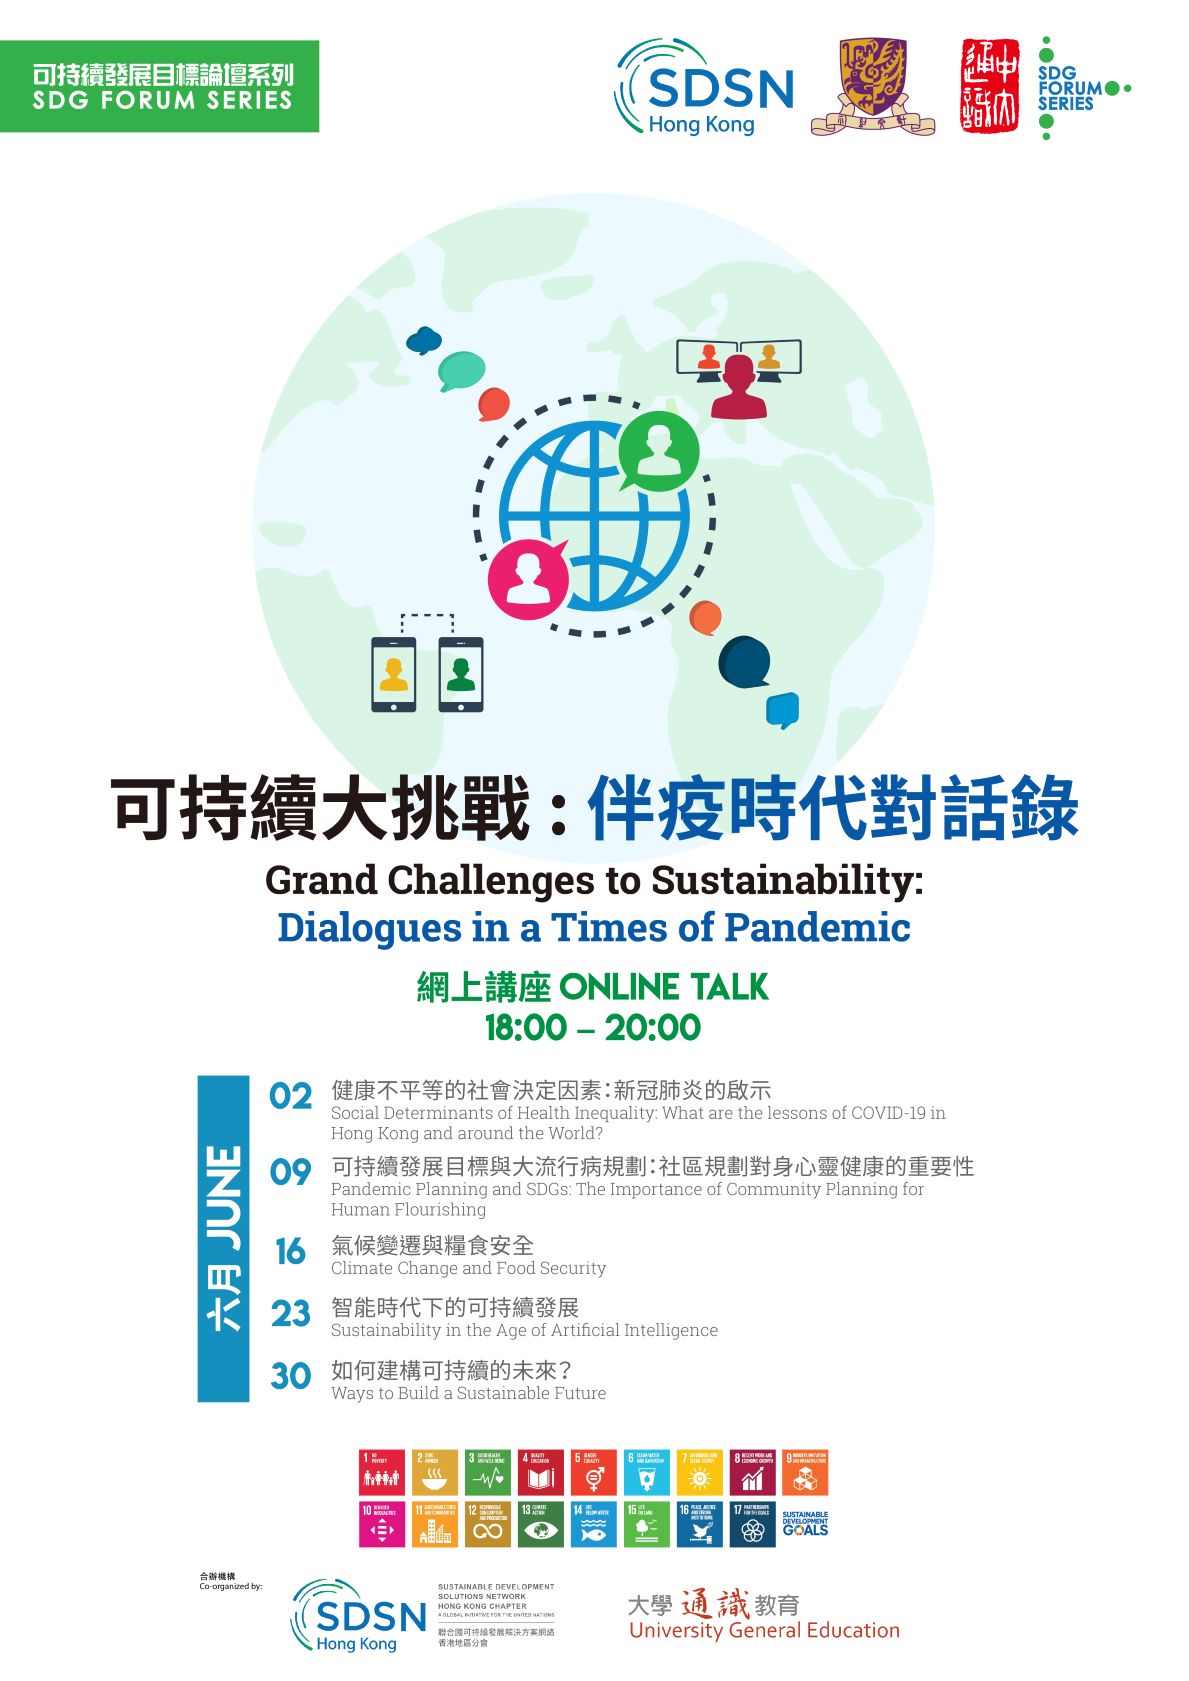 SDSNHK X GE SDG Forum 202006 Main Poster